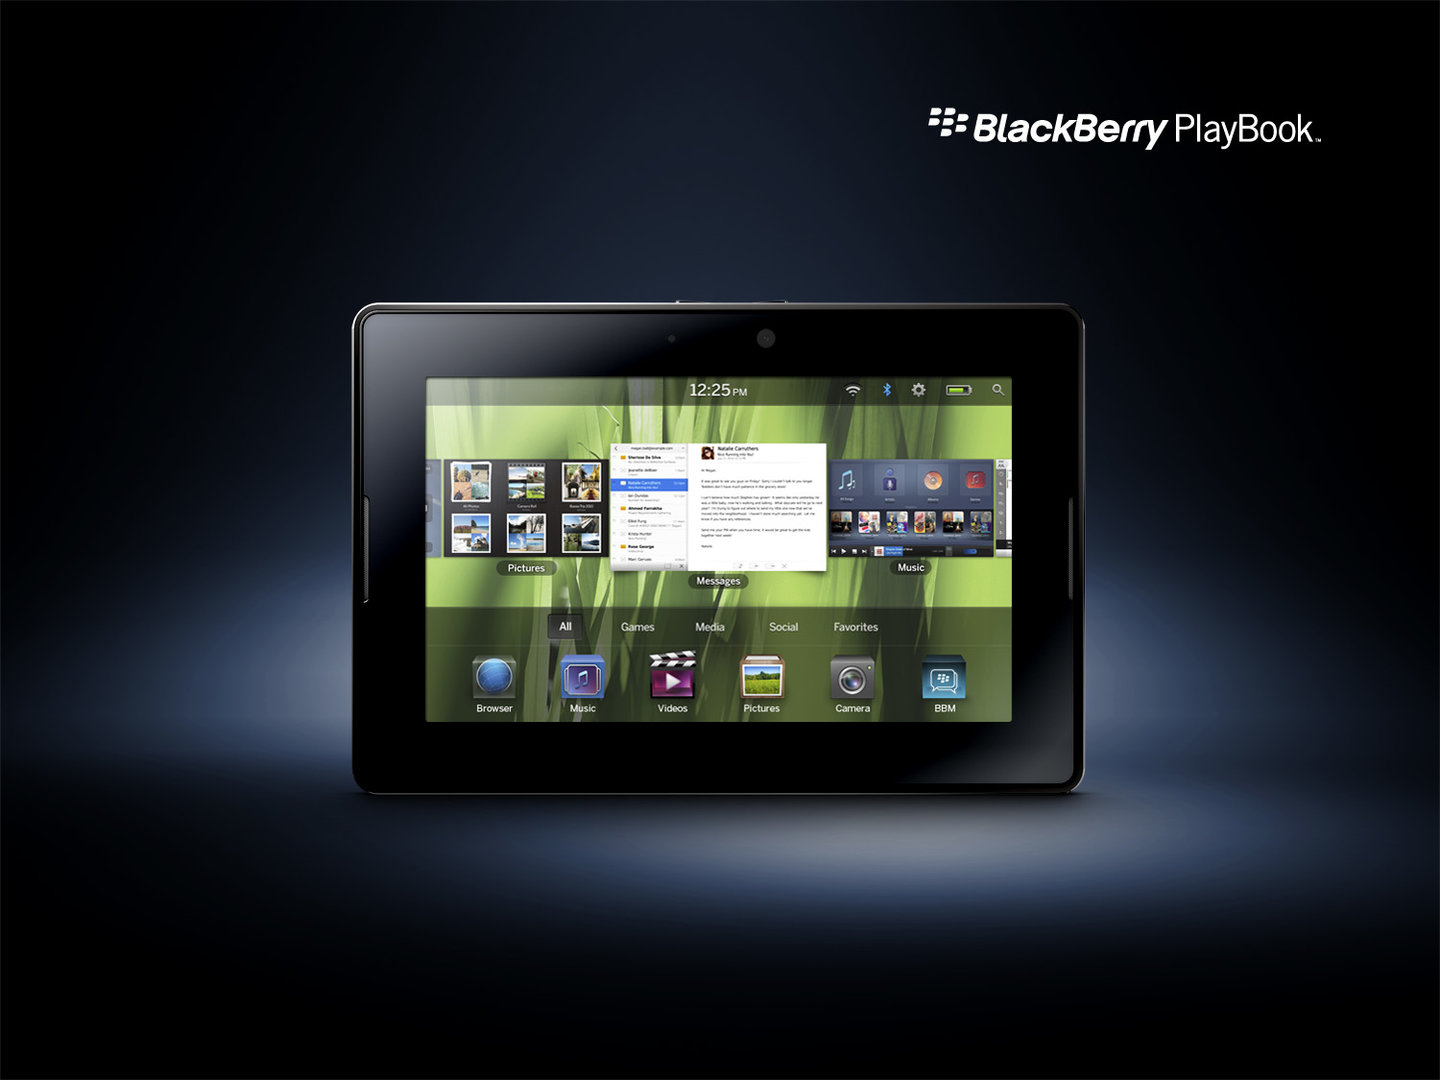 BlackBerry PlayBook: Navigator